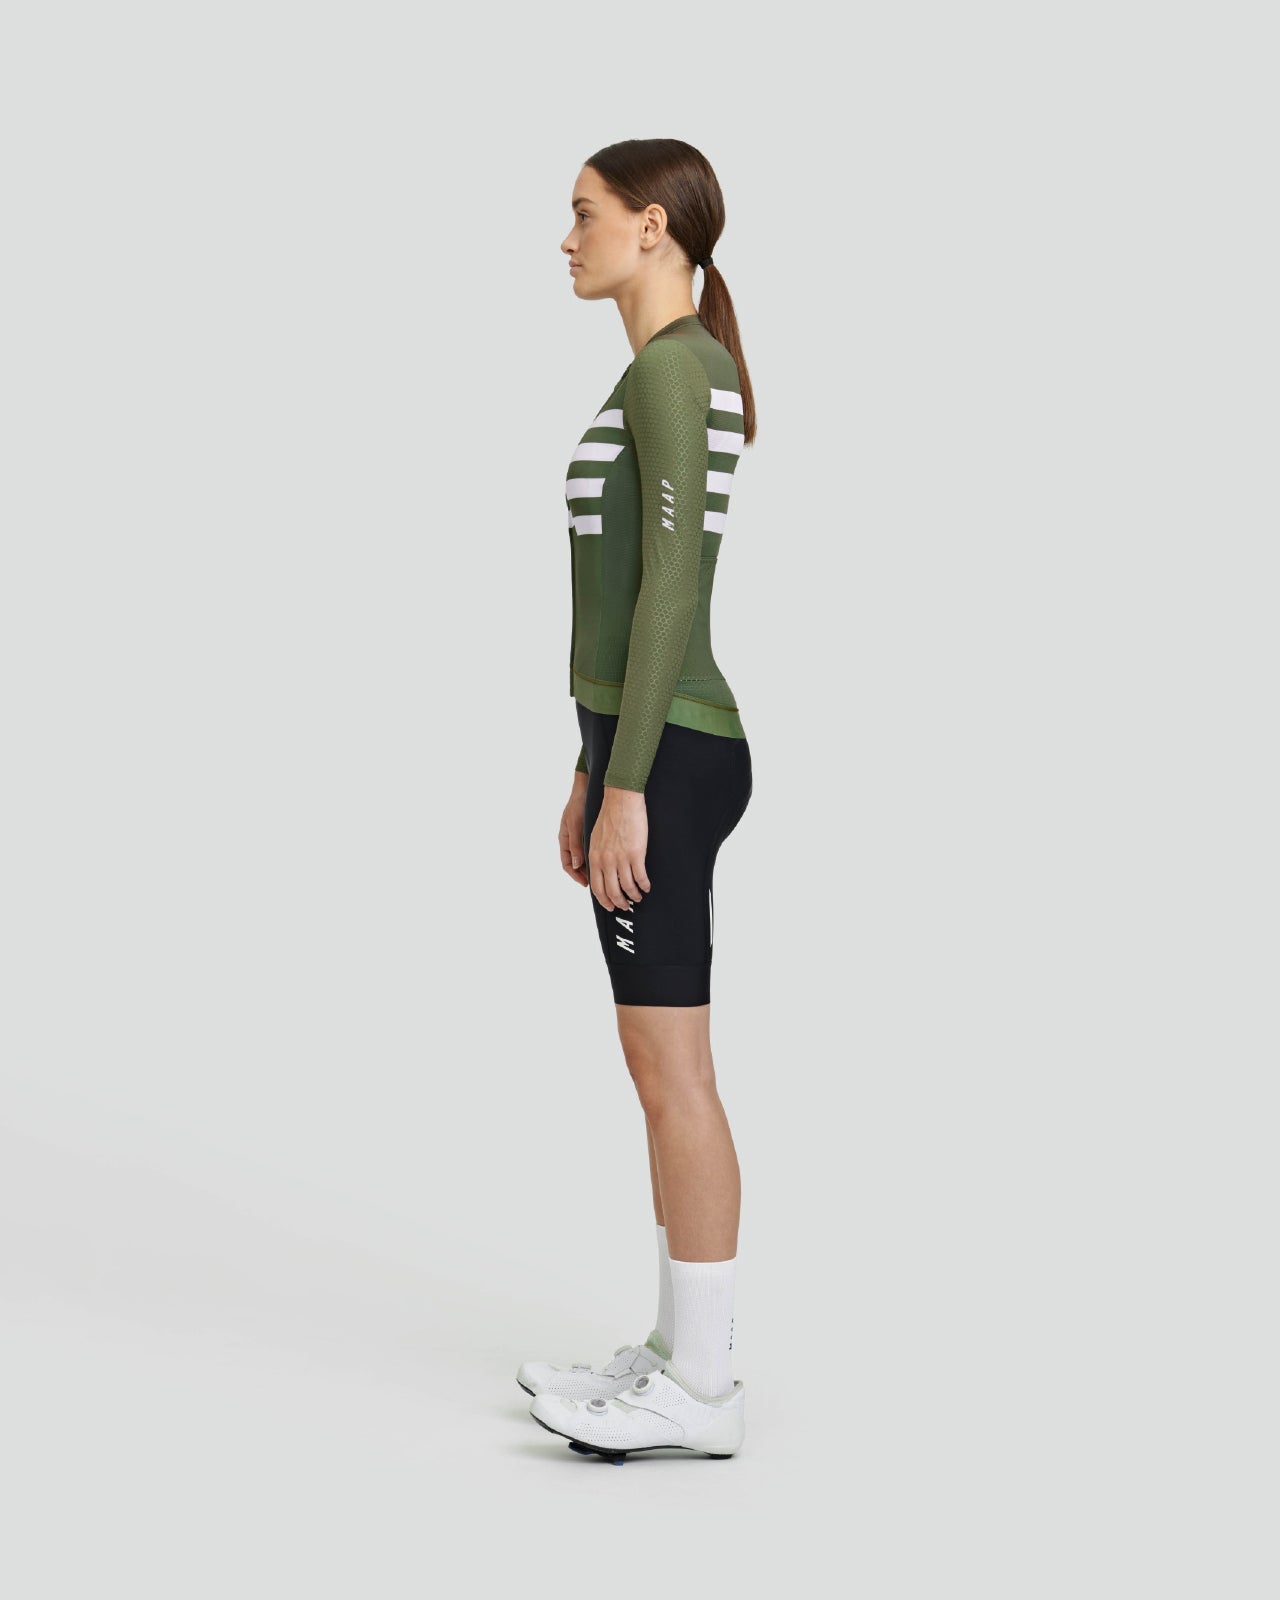 Women's Emblem Pro Hex LS Jersey - MAAP Cycling Apparel